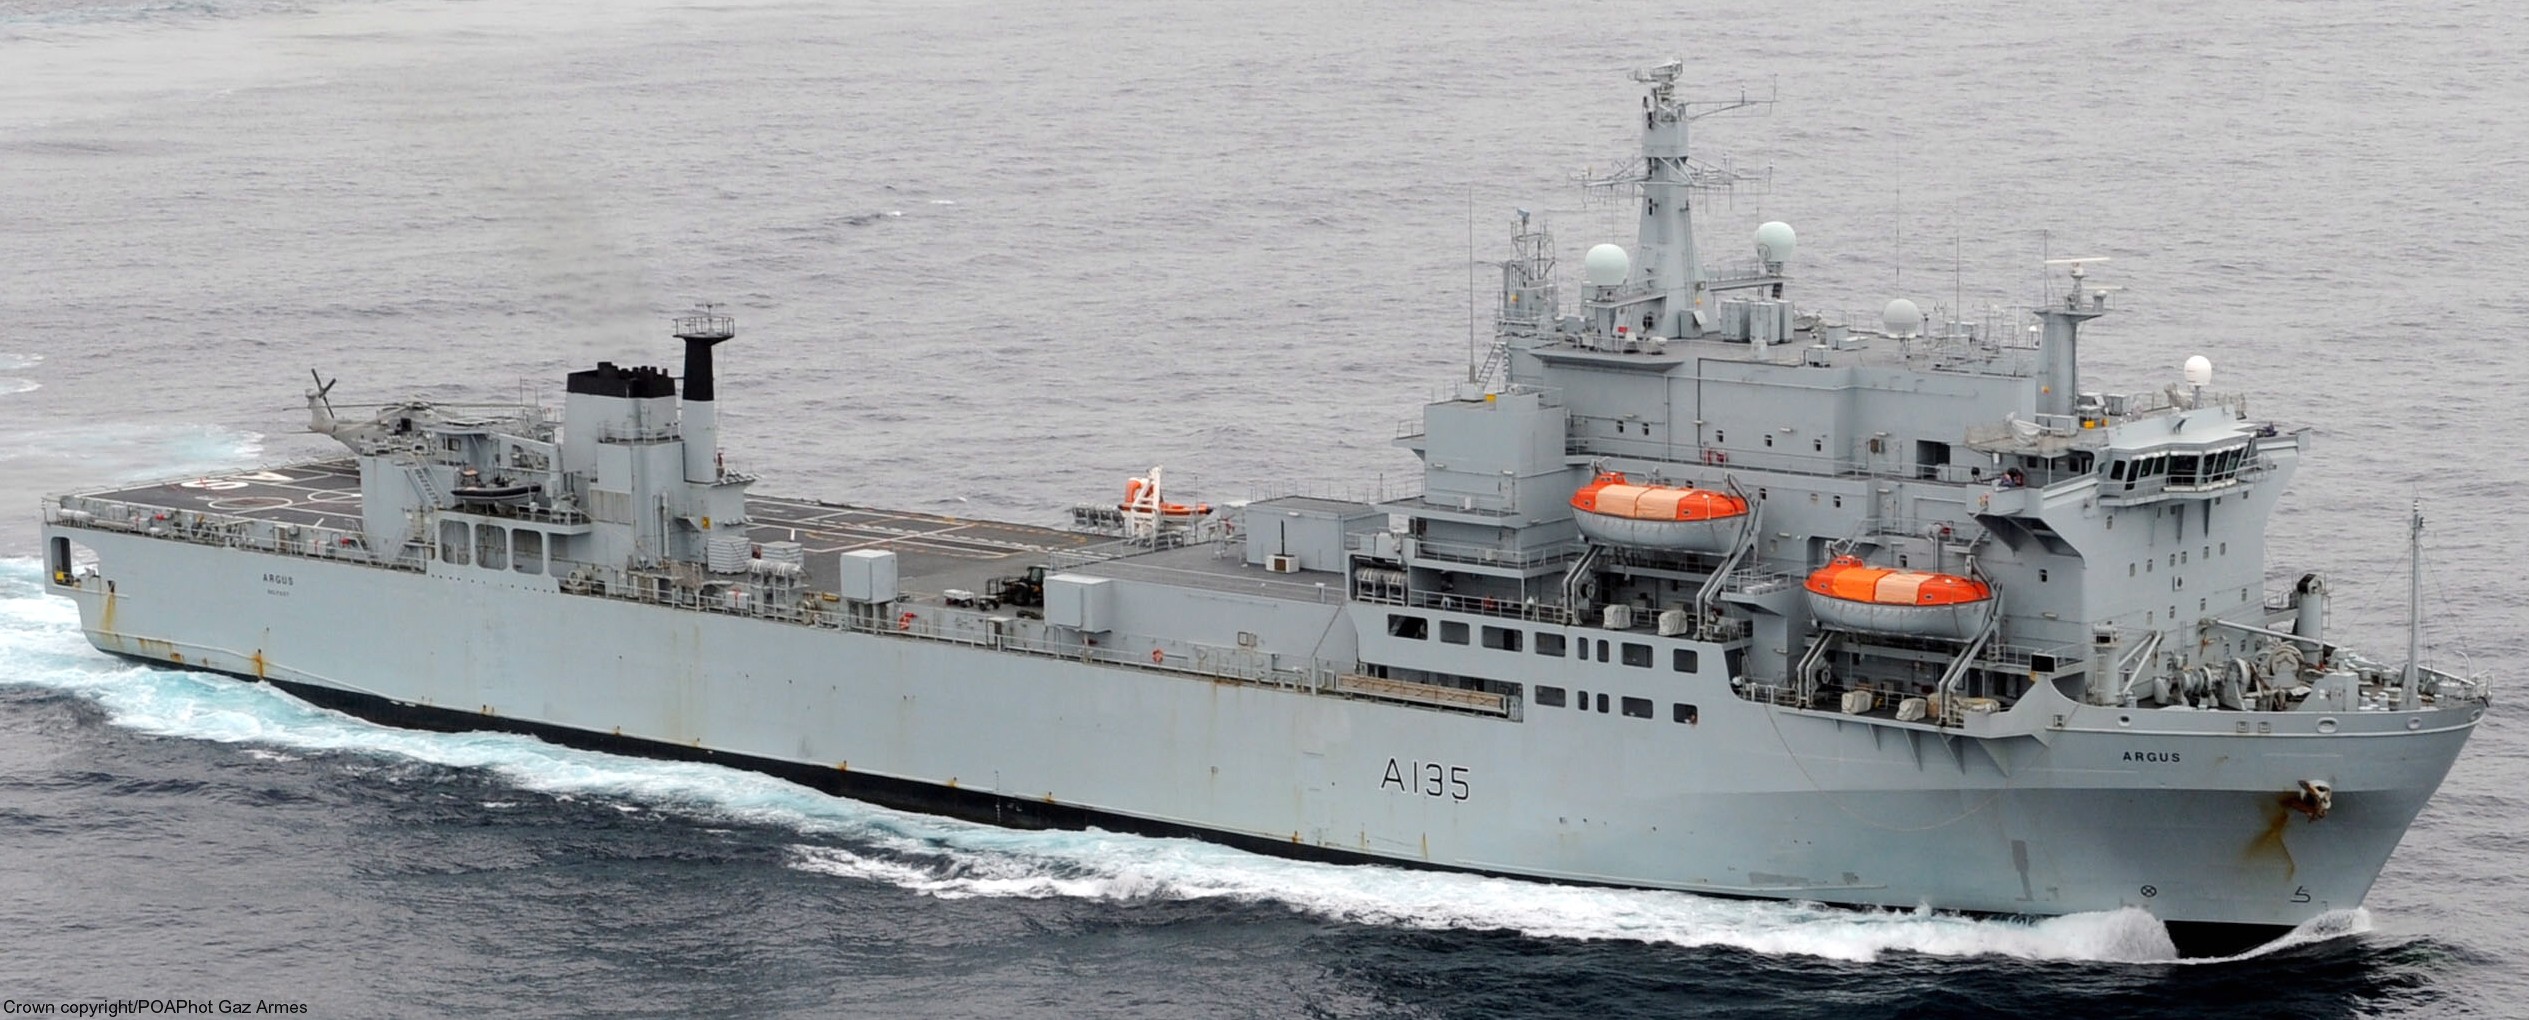 a 135 rfa argus casualty receiving ship support royal fleet auxilary navy 08